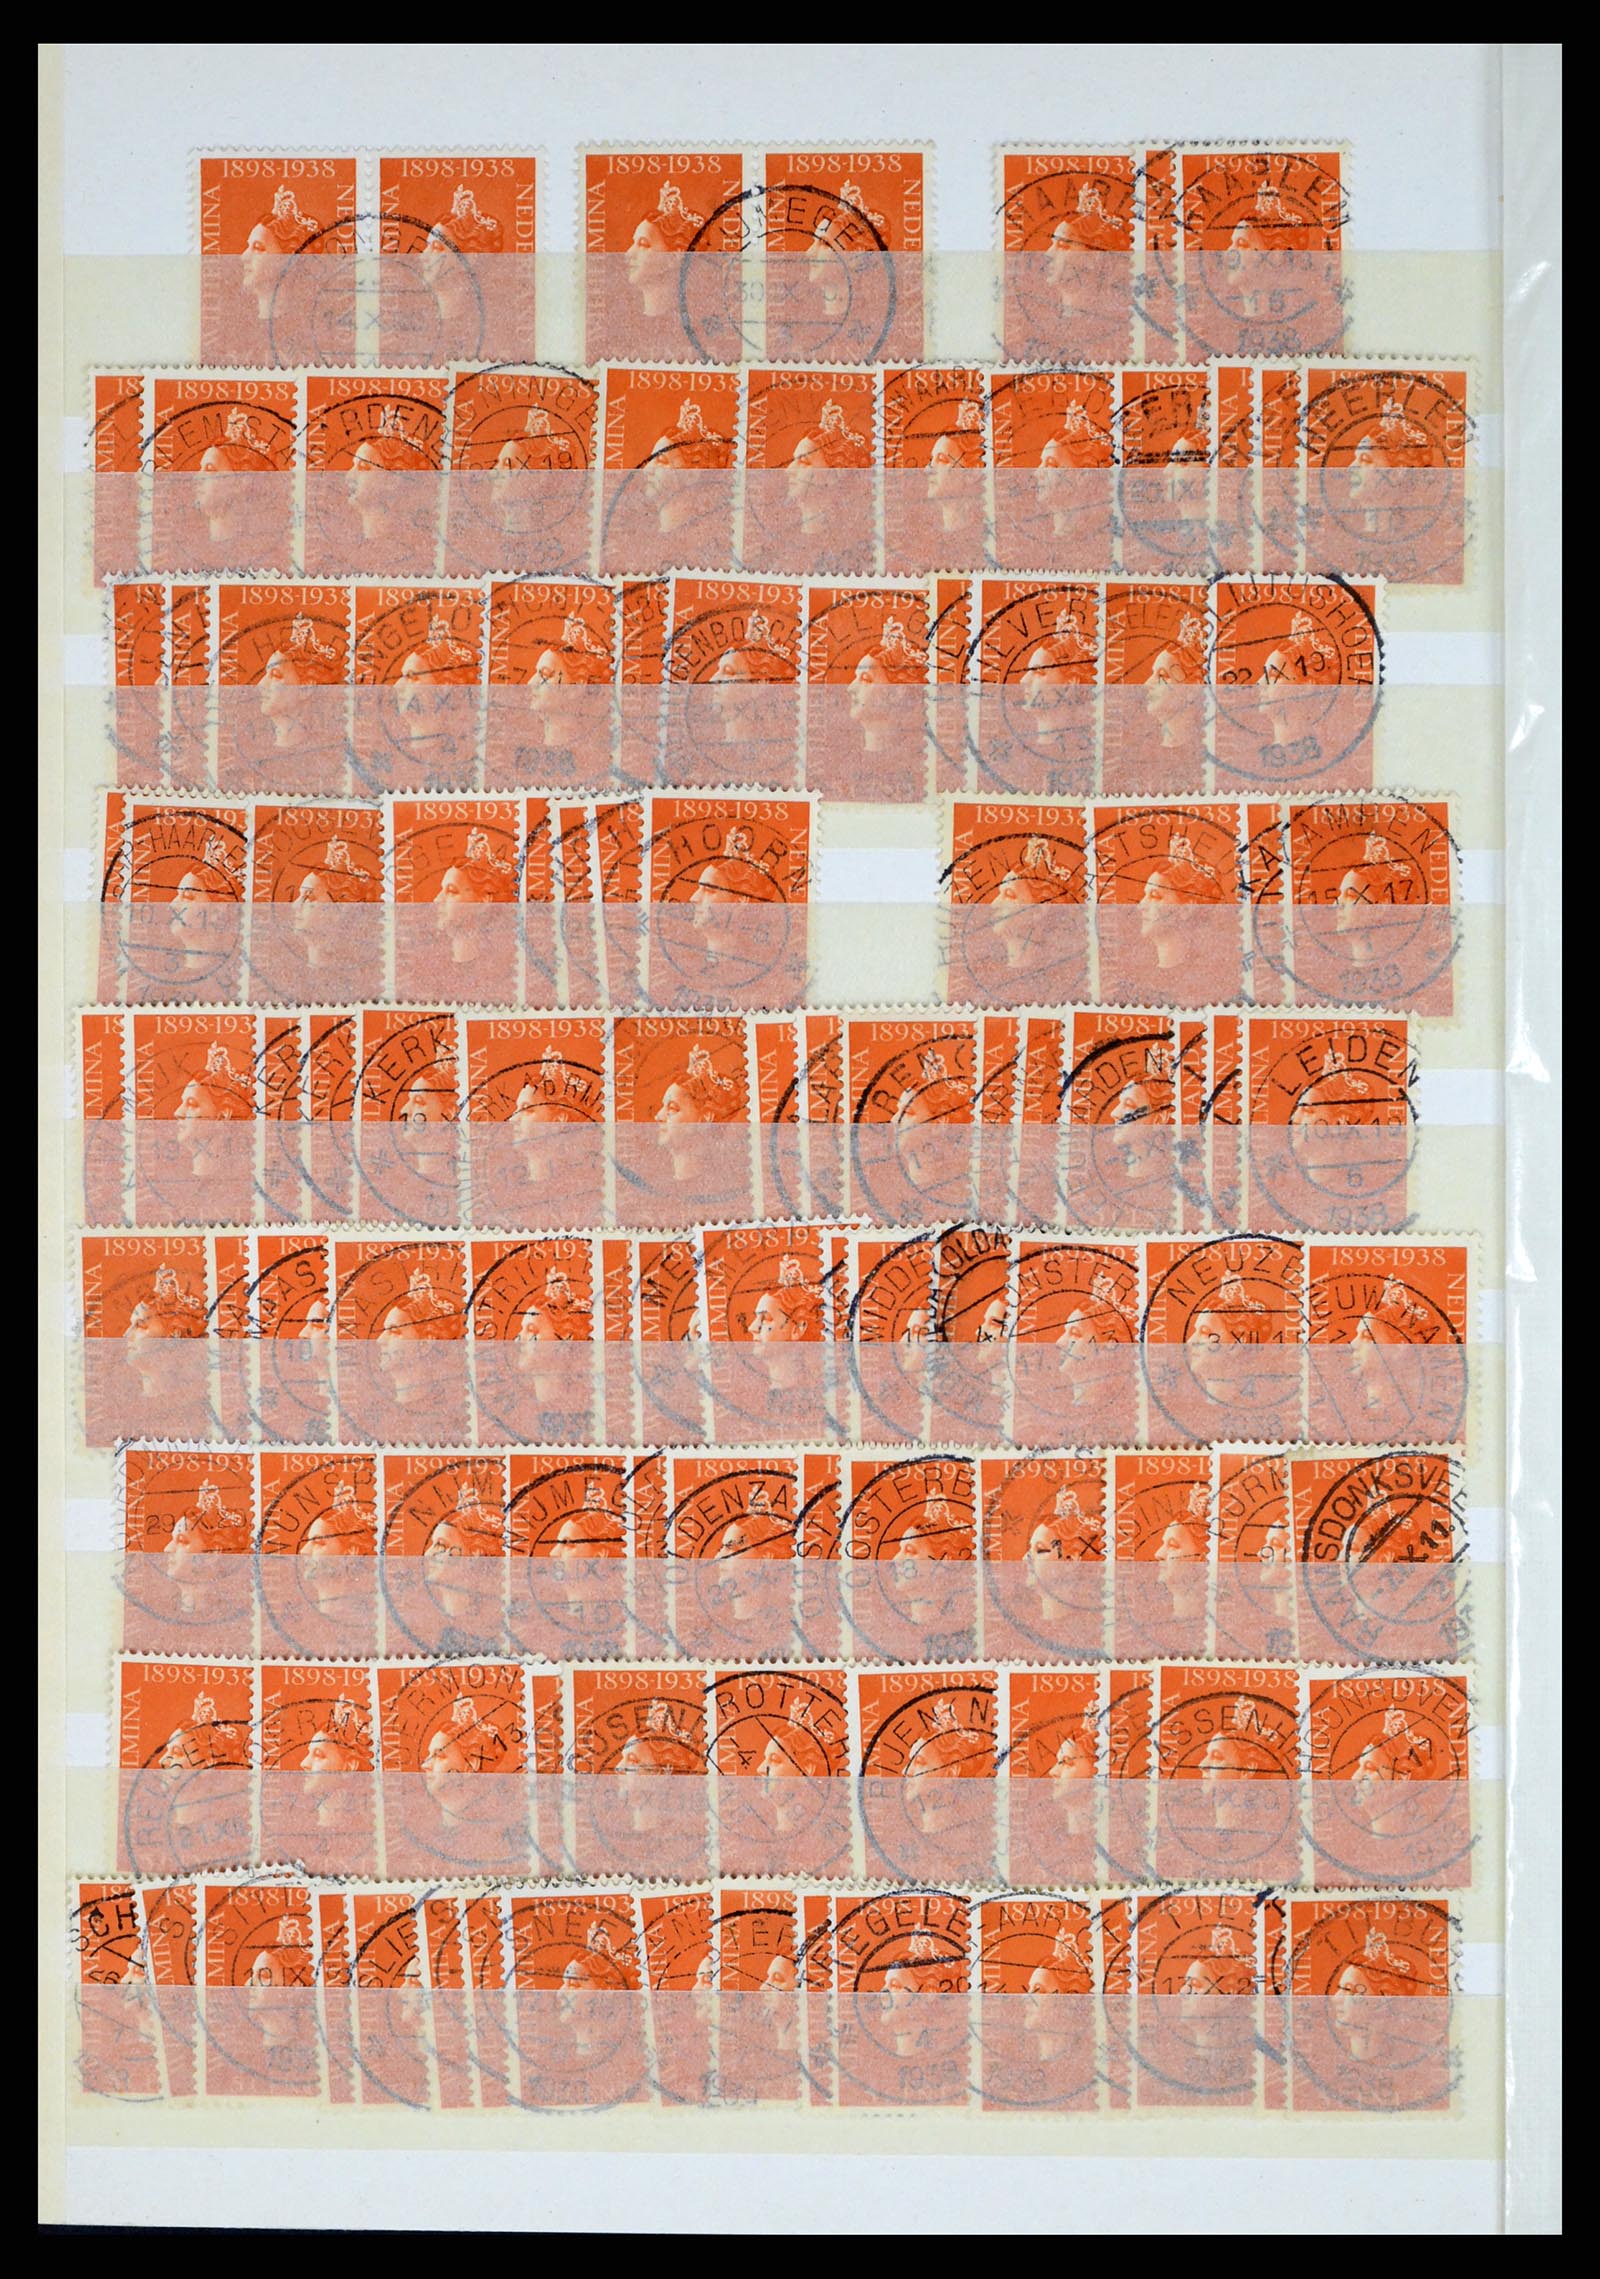 37424 024 - Stamp collection 37424 Netherlands shortbar cancels.